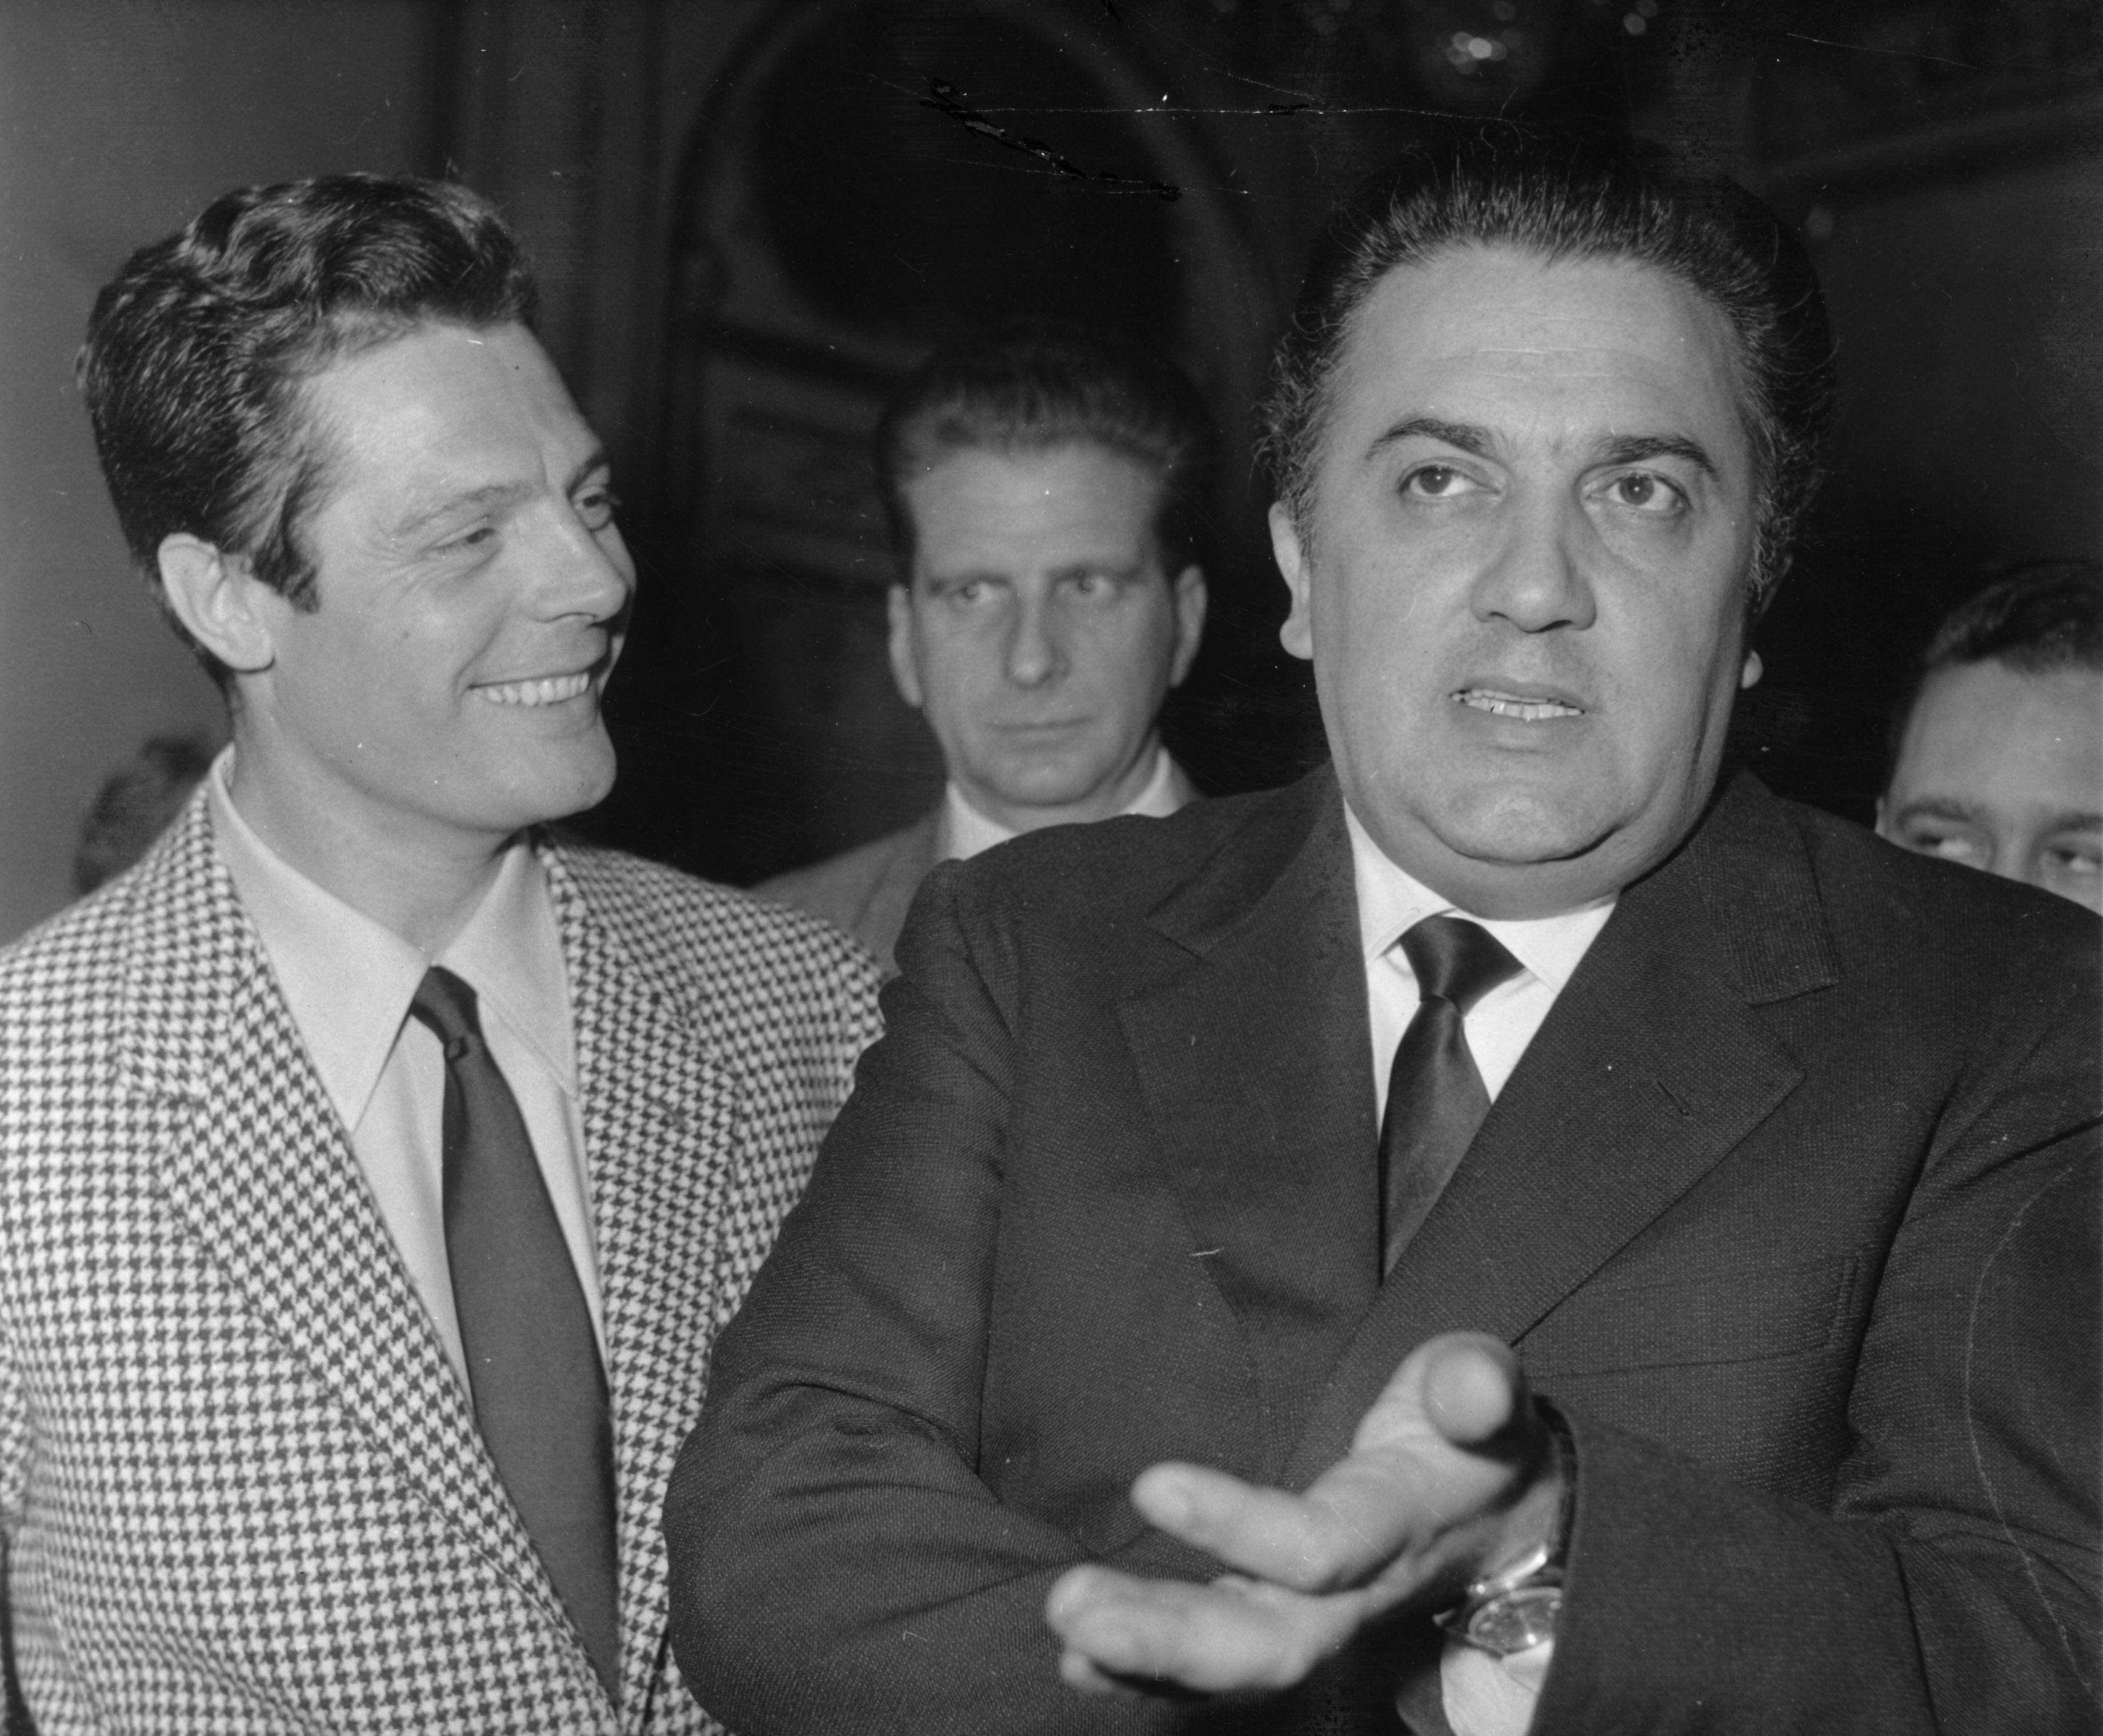 Federico Fellini and Marcello Mastroianni, during a press conference on the promotional tour for 'La Dolce Vita' (1960).